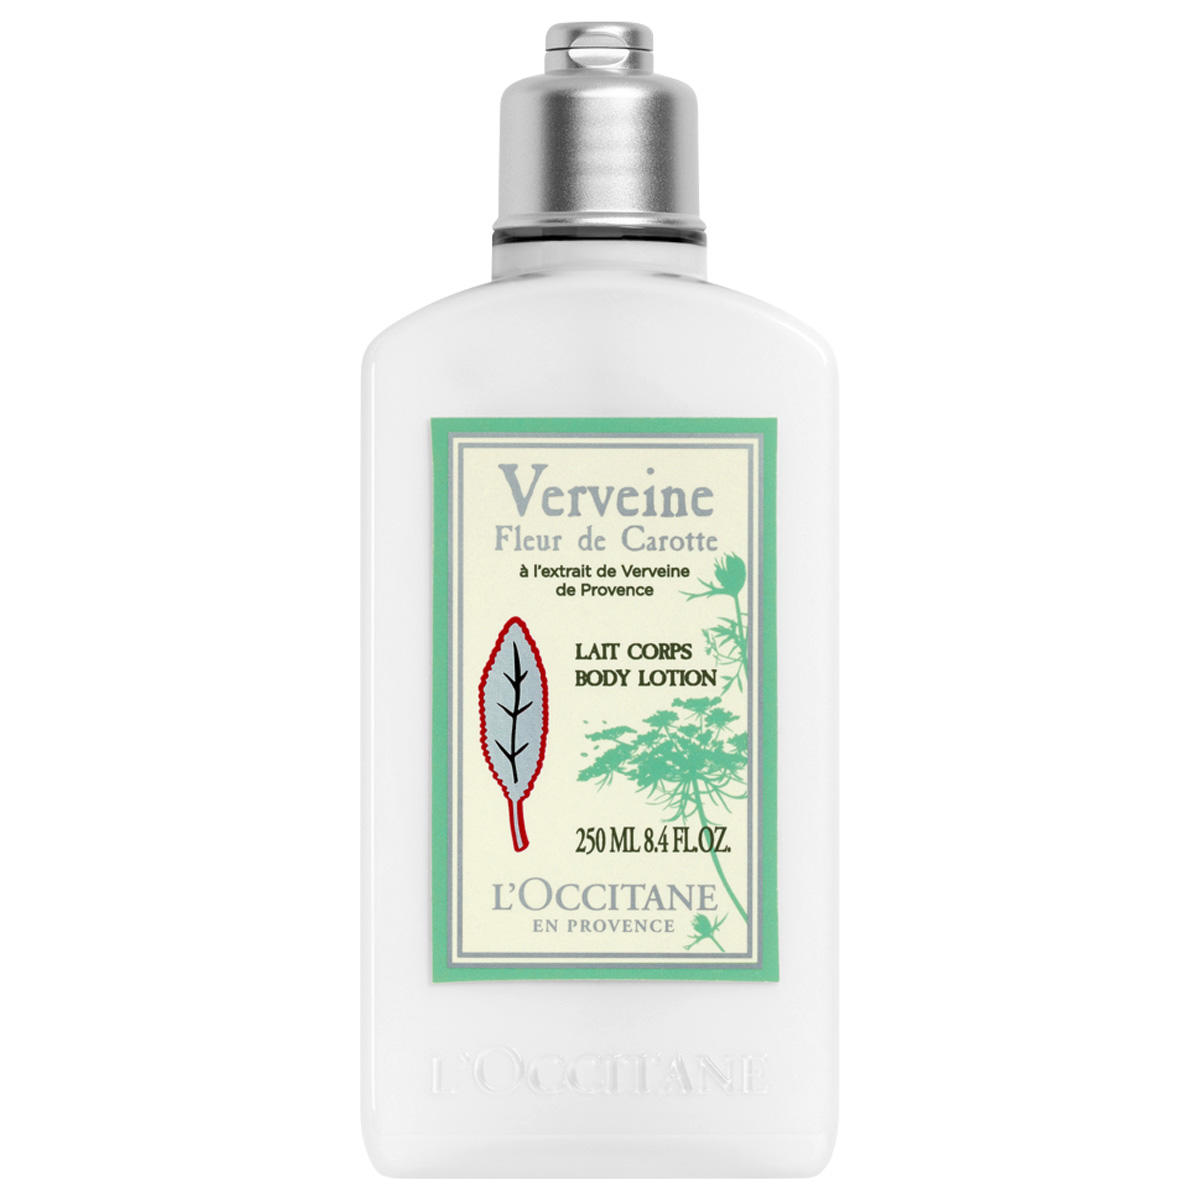 L'Occitane Verbene Fleur de Carotte Bosy Lotion Limited Edition 250 ml - 2